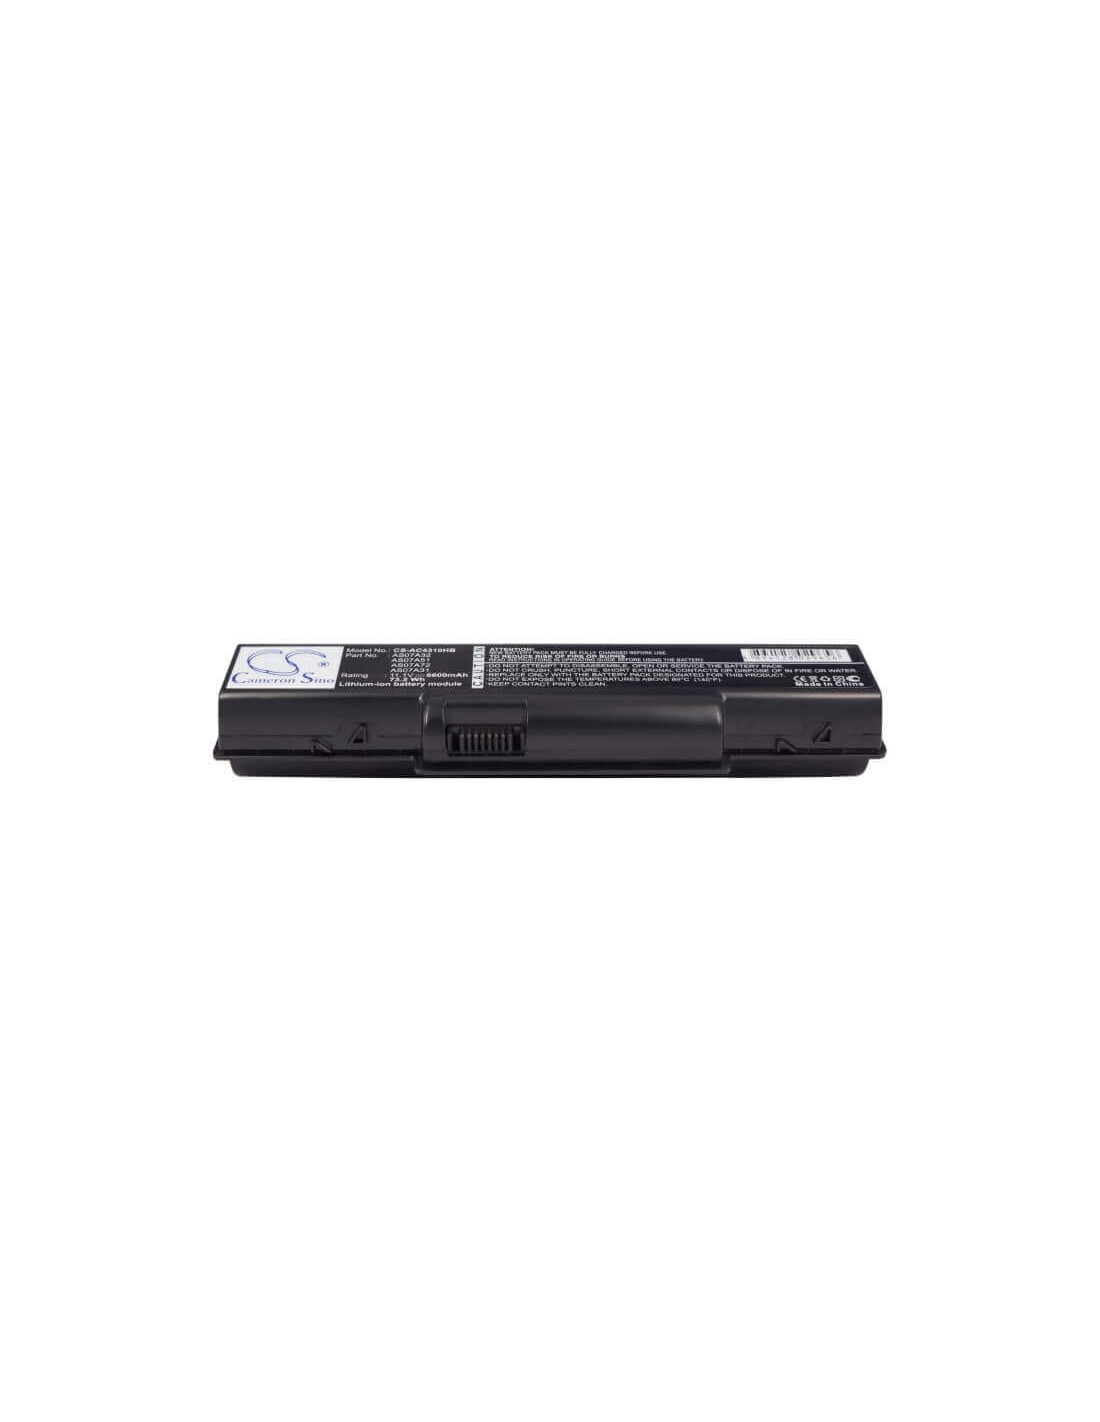 Black Battery for Acer Aspire 4710z, Aspire 2930g, Aspire 4730zg 11.1V, 6600mAh - 73.26Wh